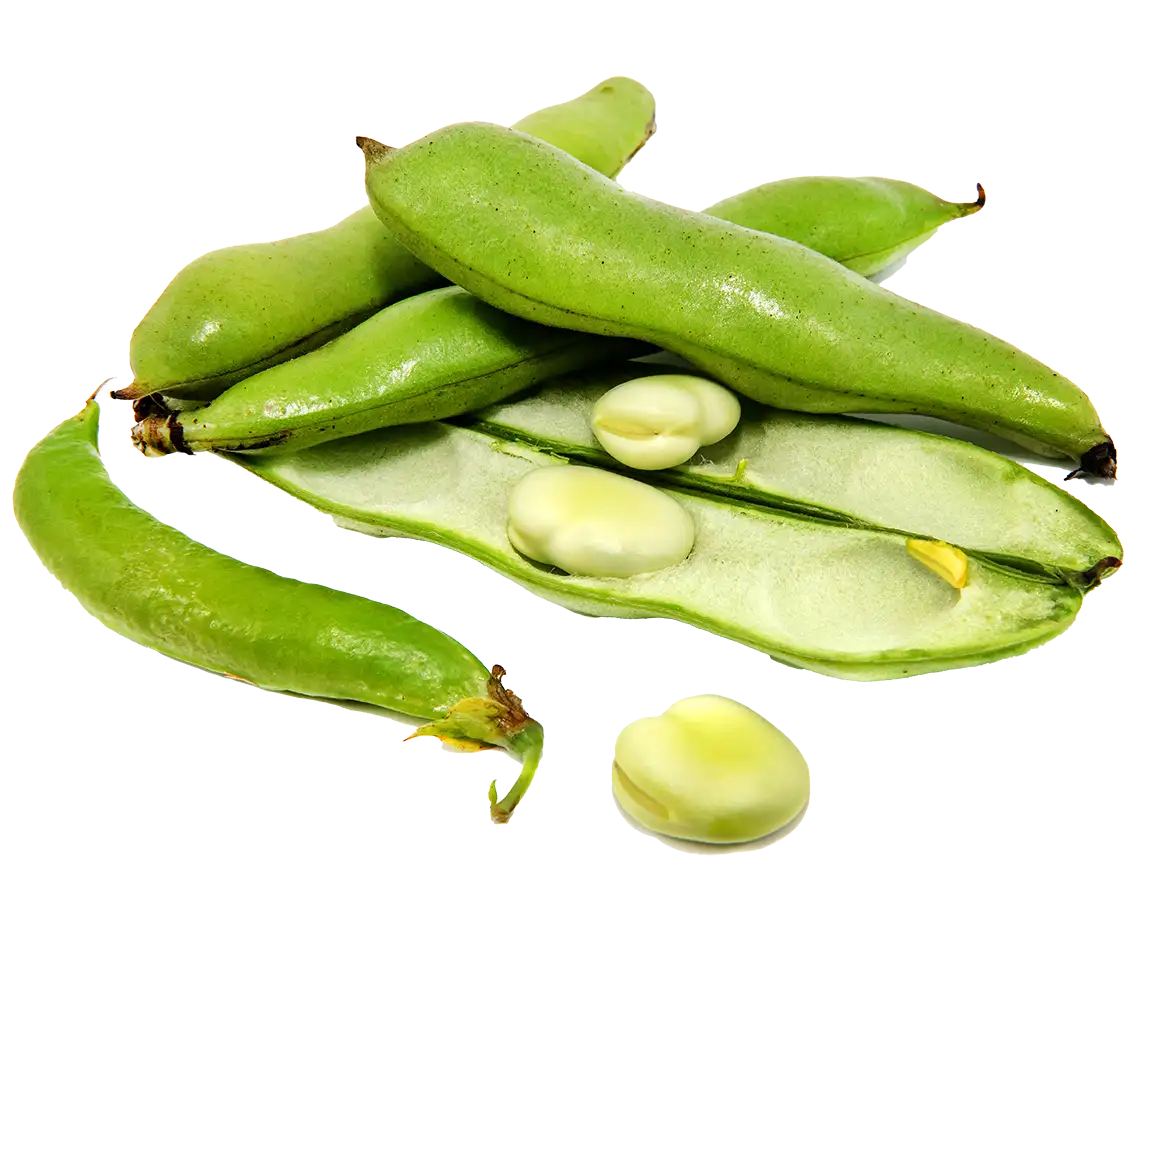 Pile of green beans with an open bean pod